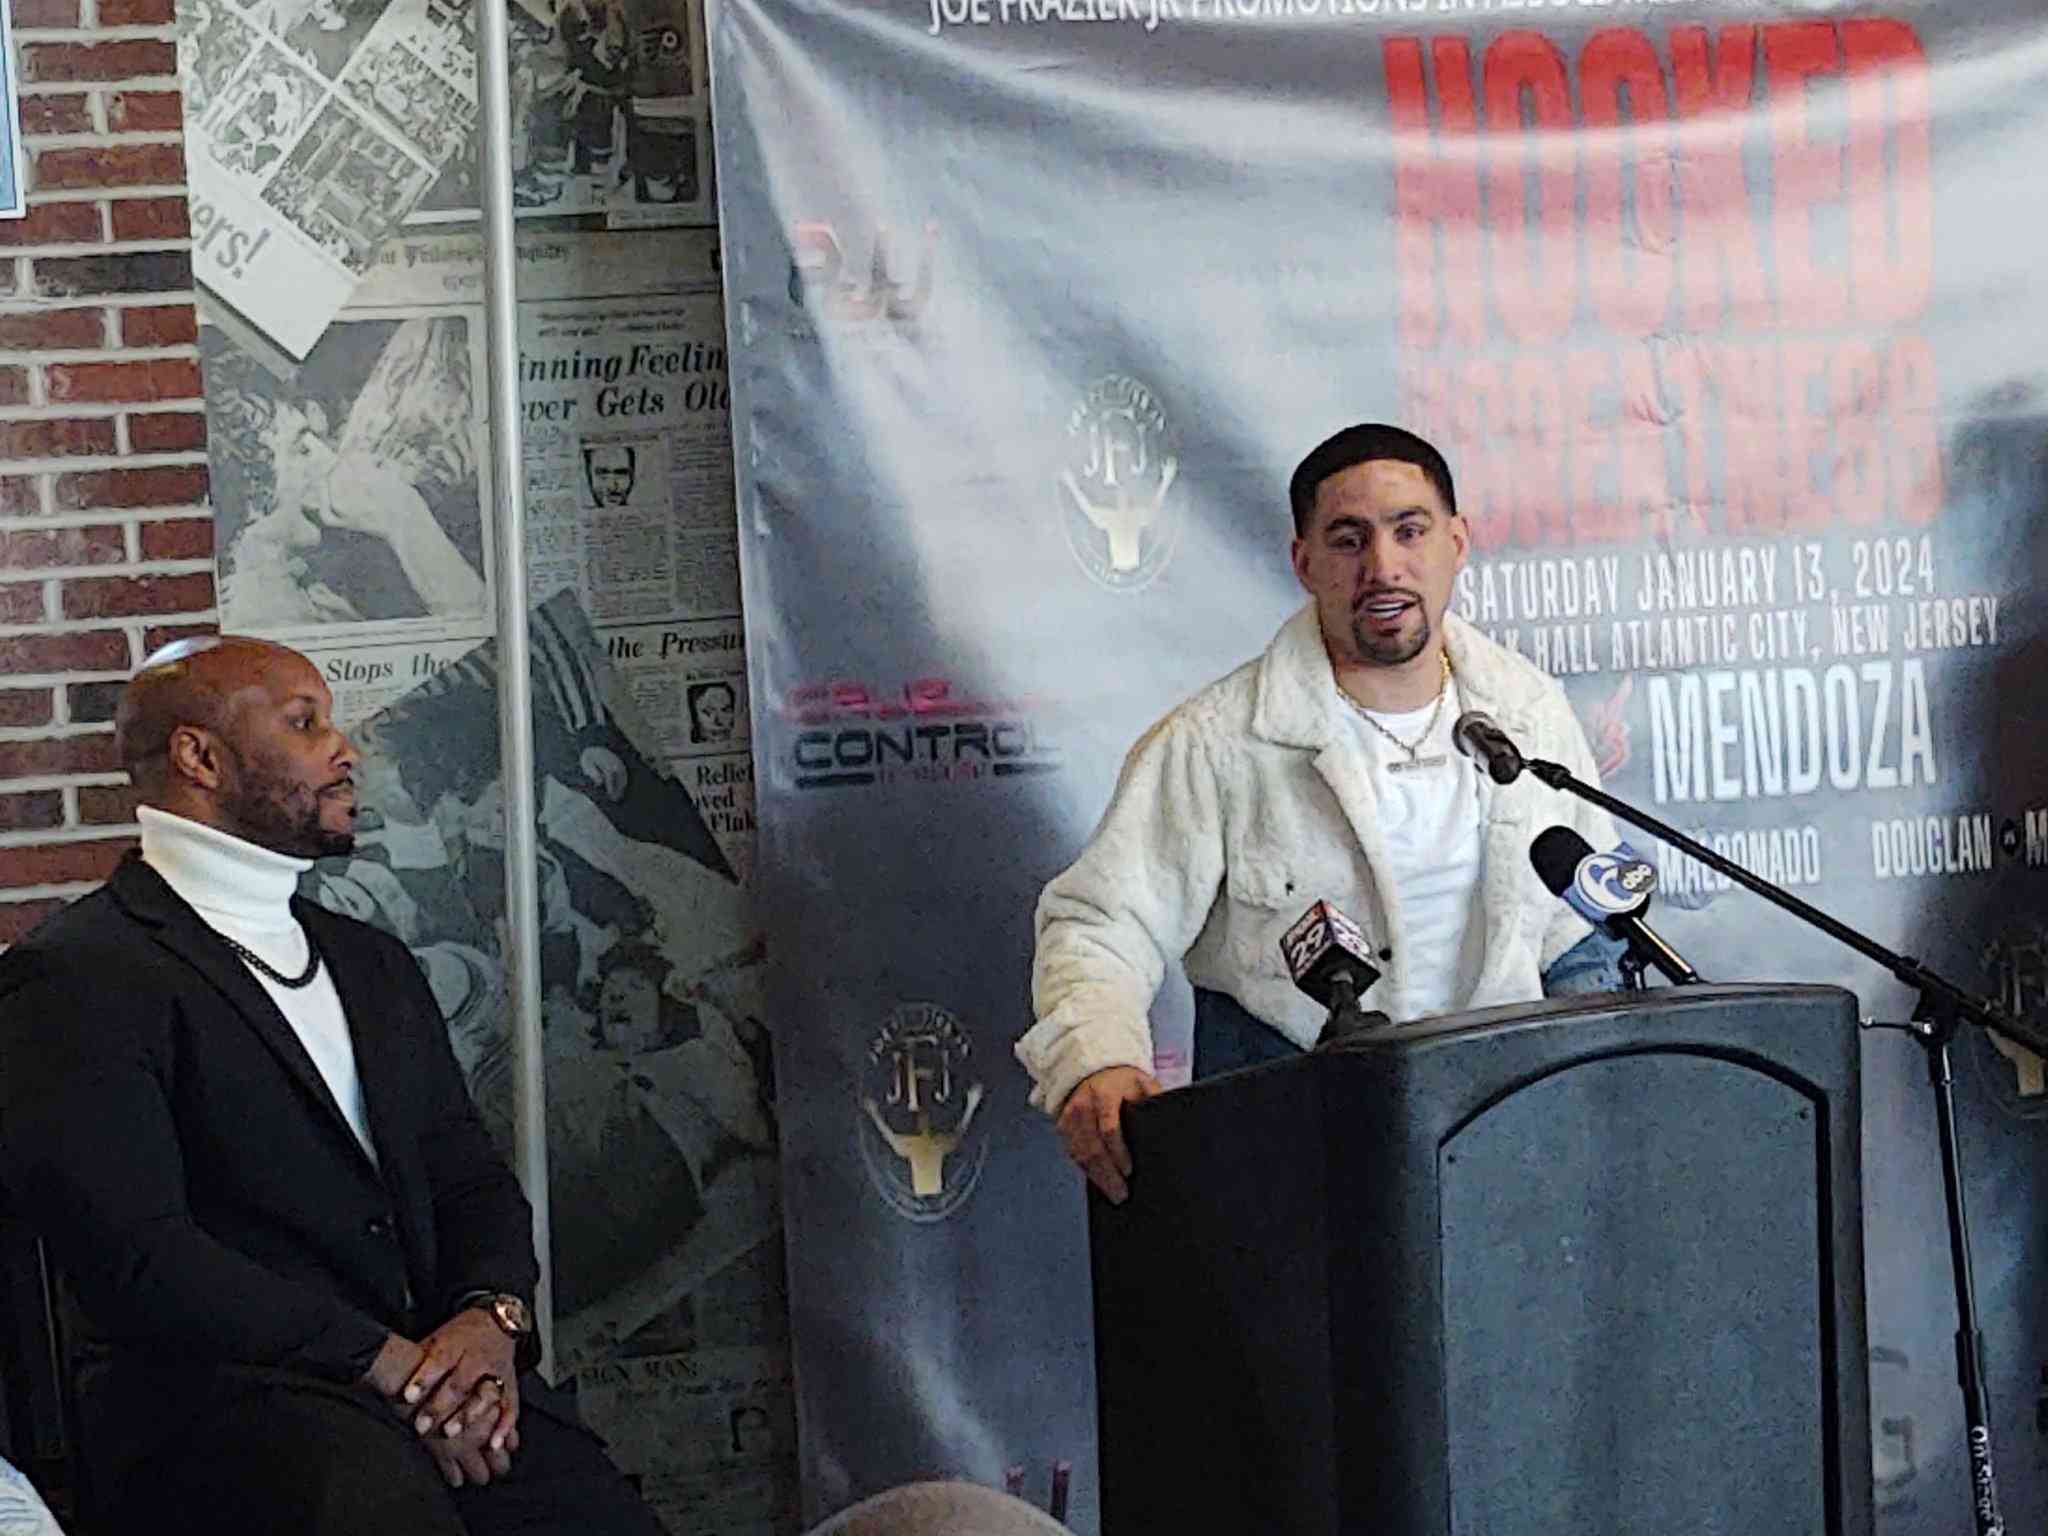 Joe Frazier Jr & Danny Garcia to promote Boxing Card to Honor Joe Frazier 80th Birthday & Legacy